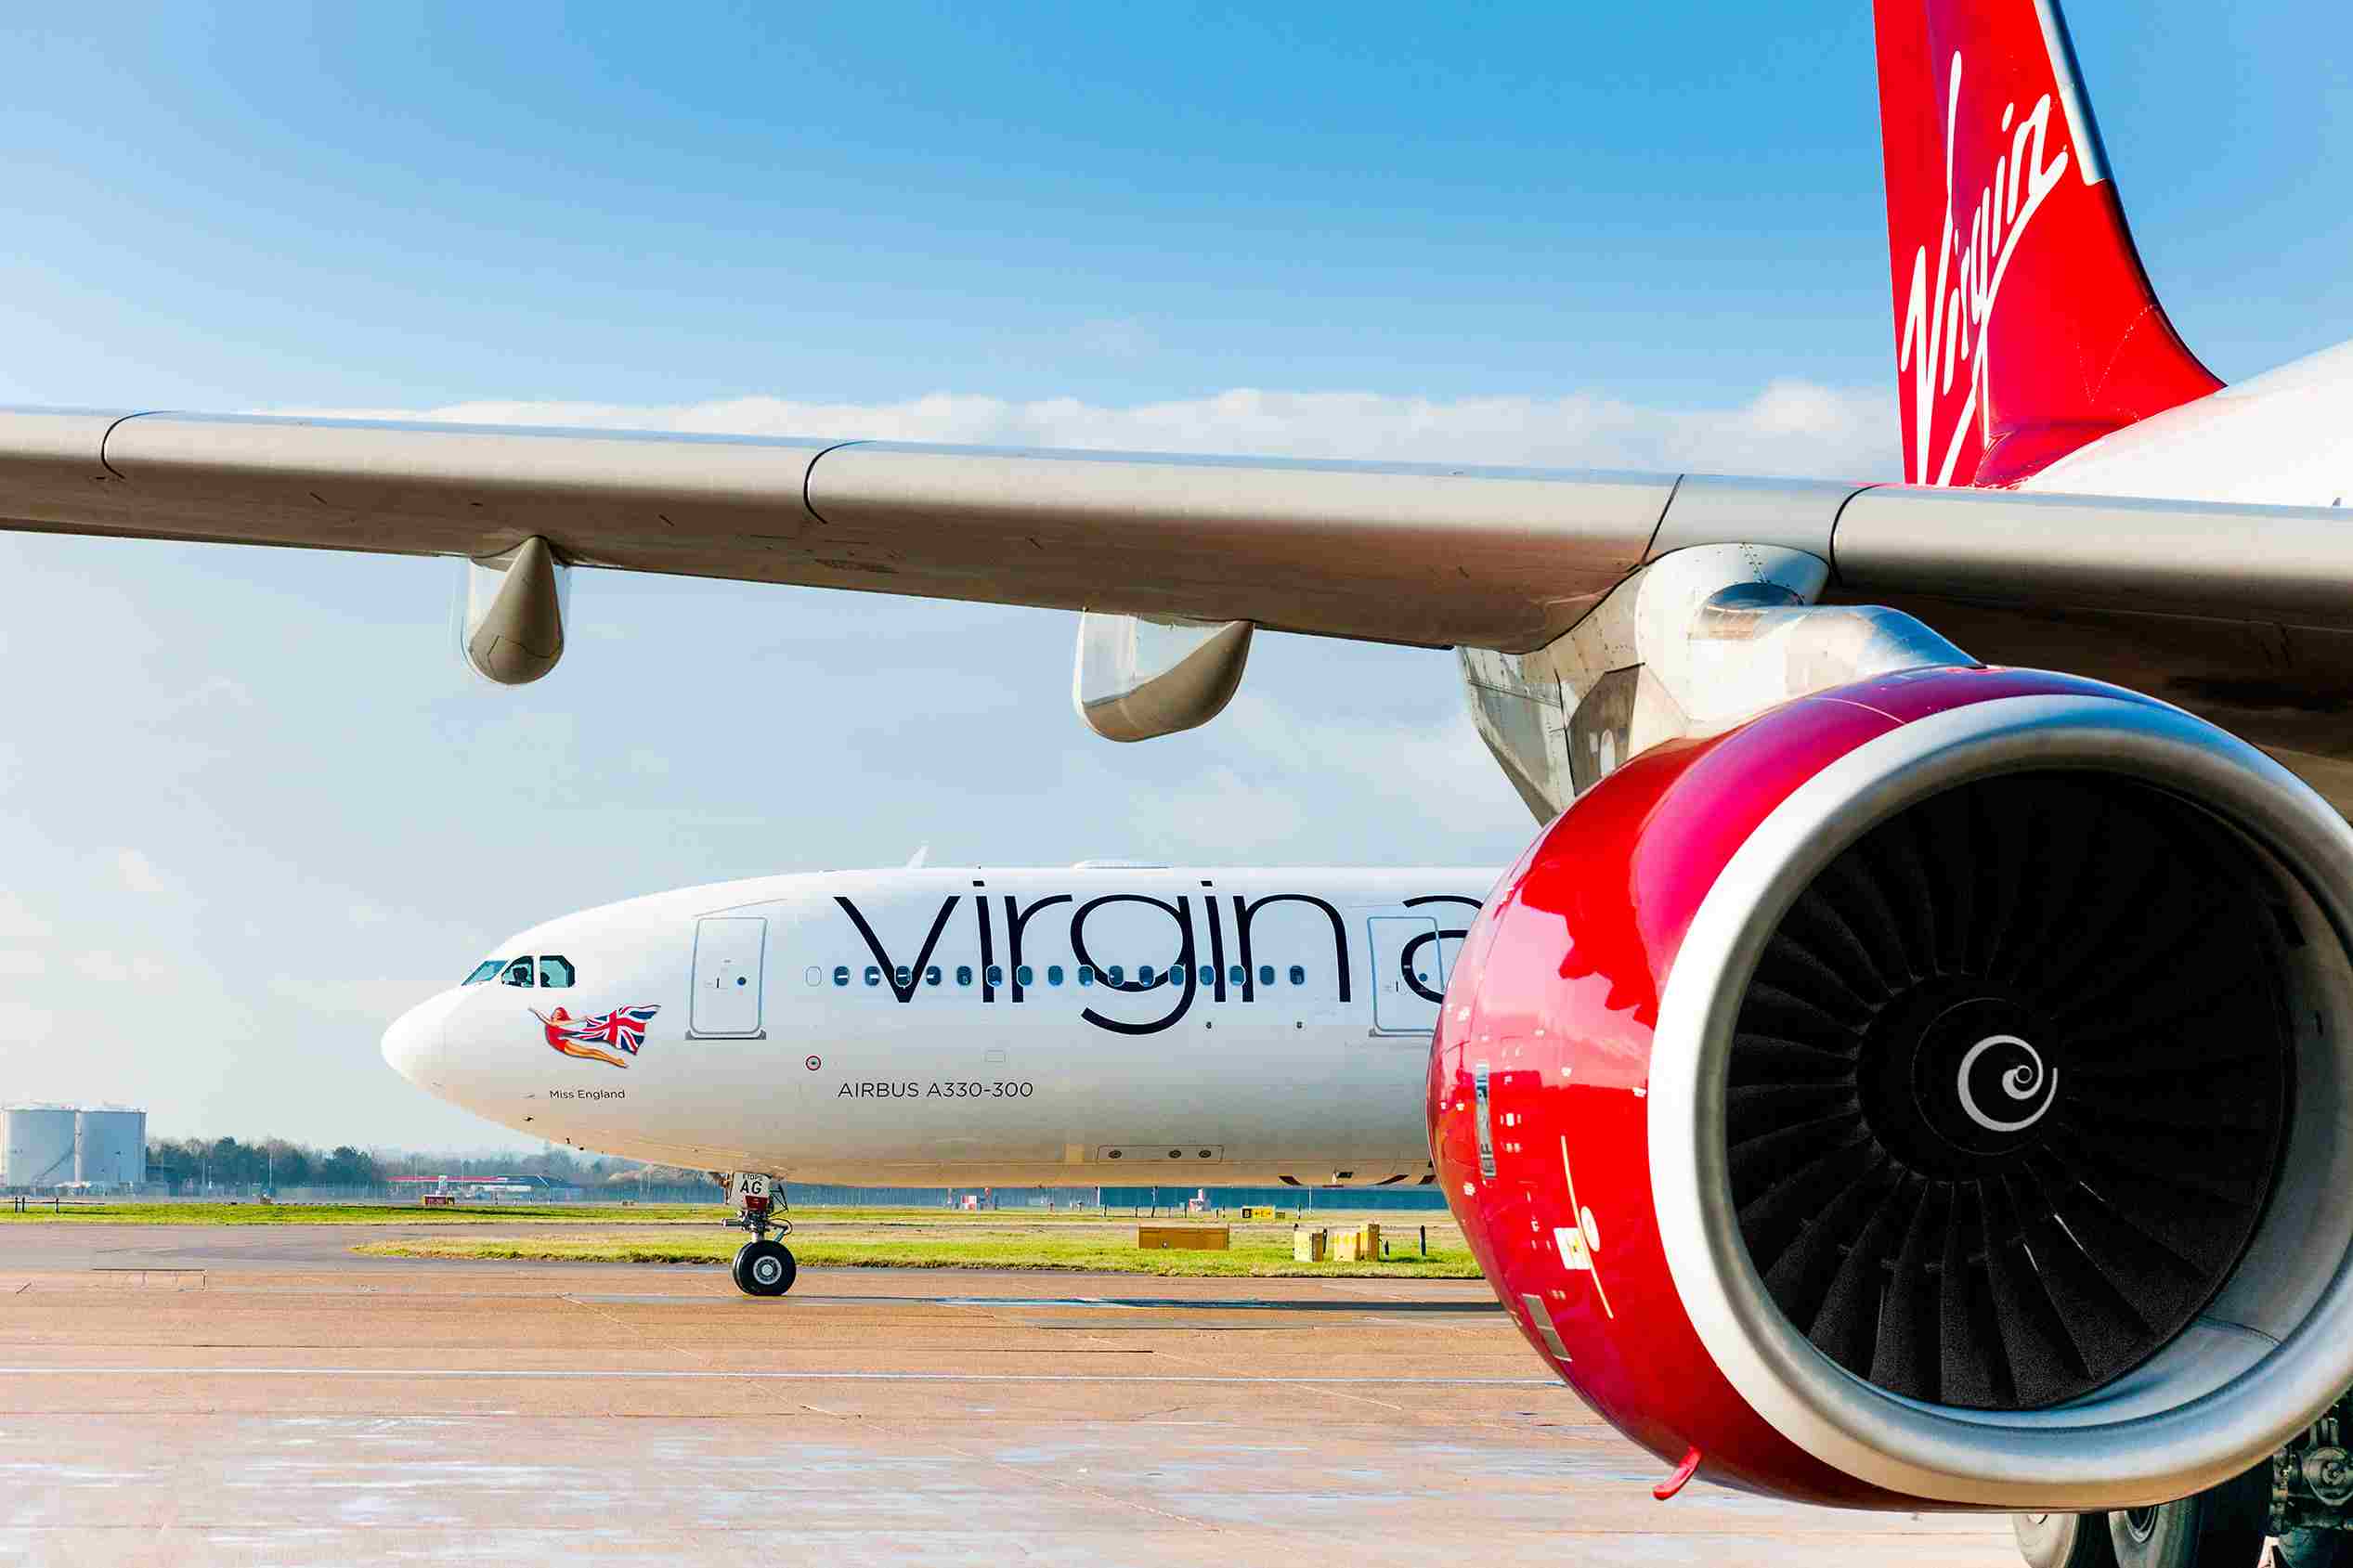 Virgin Atlantic plane and engine